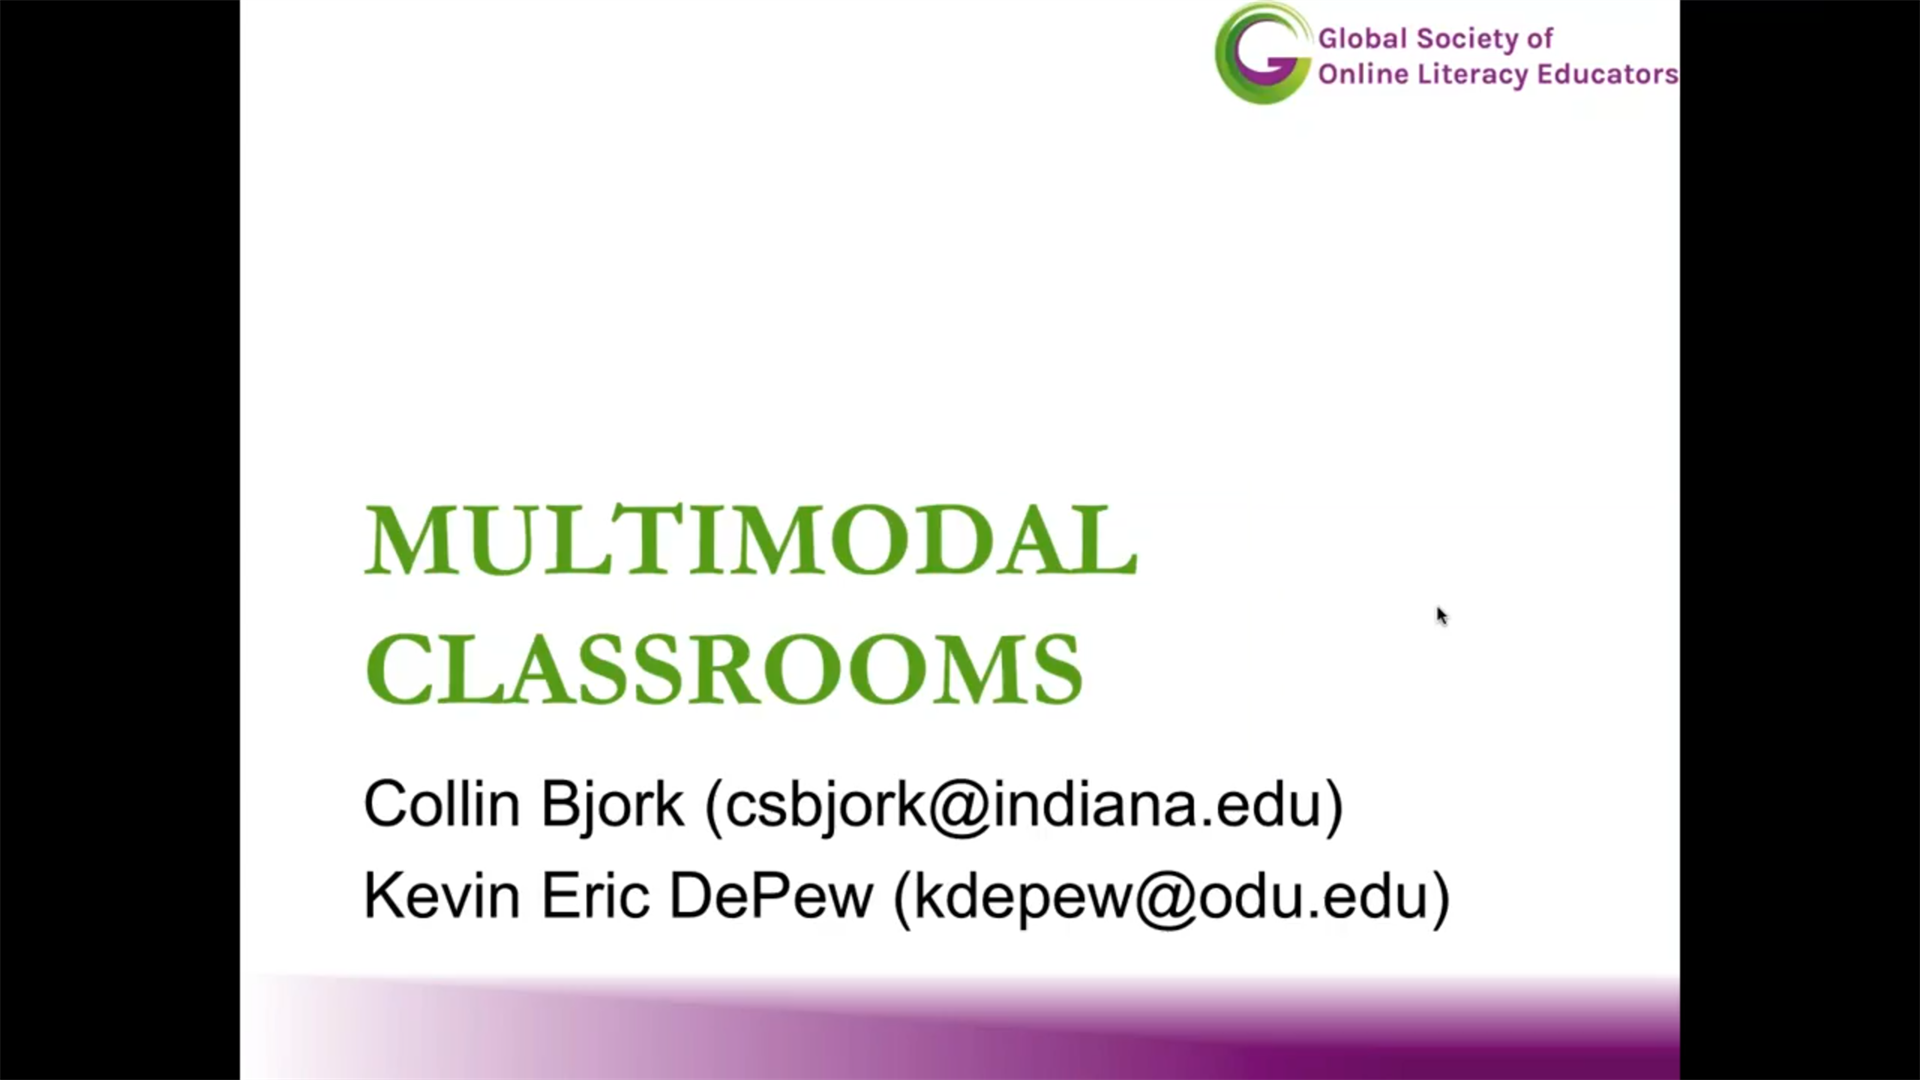 Webinar Screen Capture: Slide title "Multimodal Classrooms"